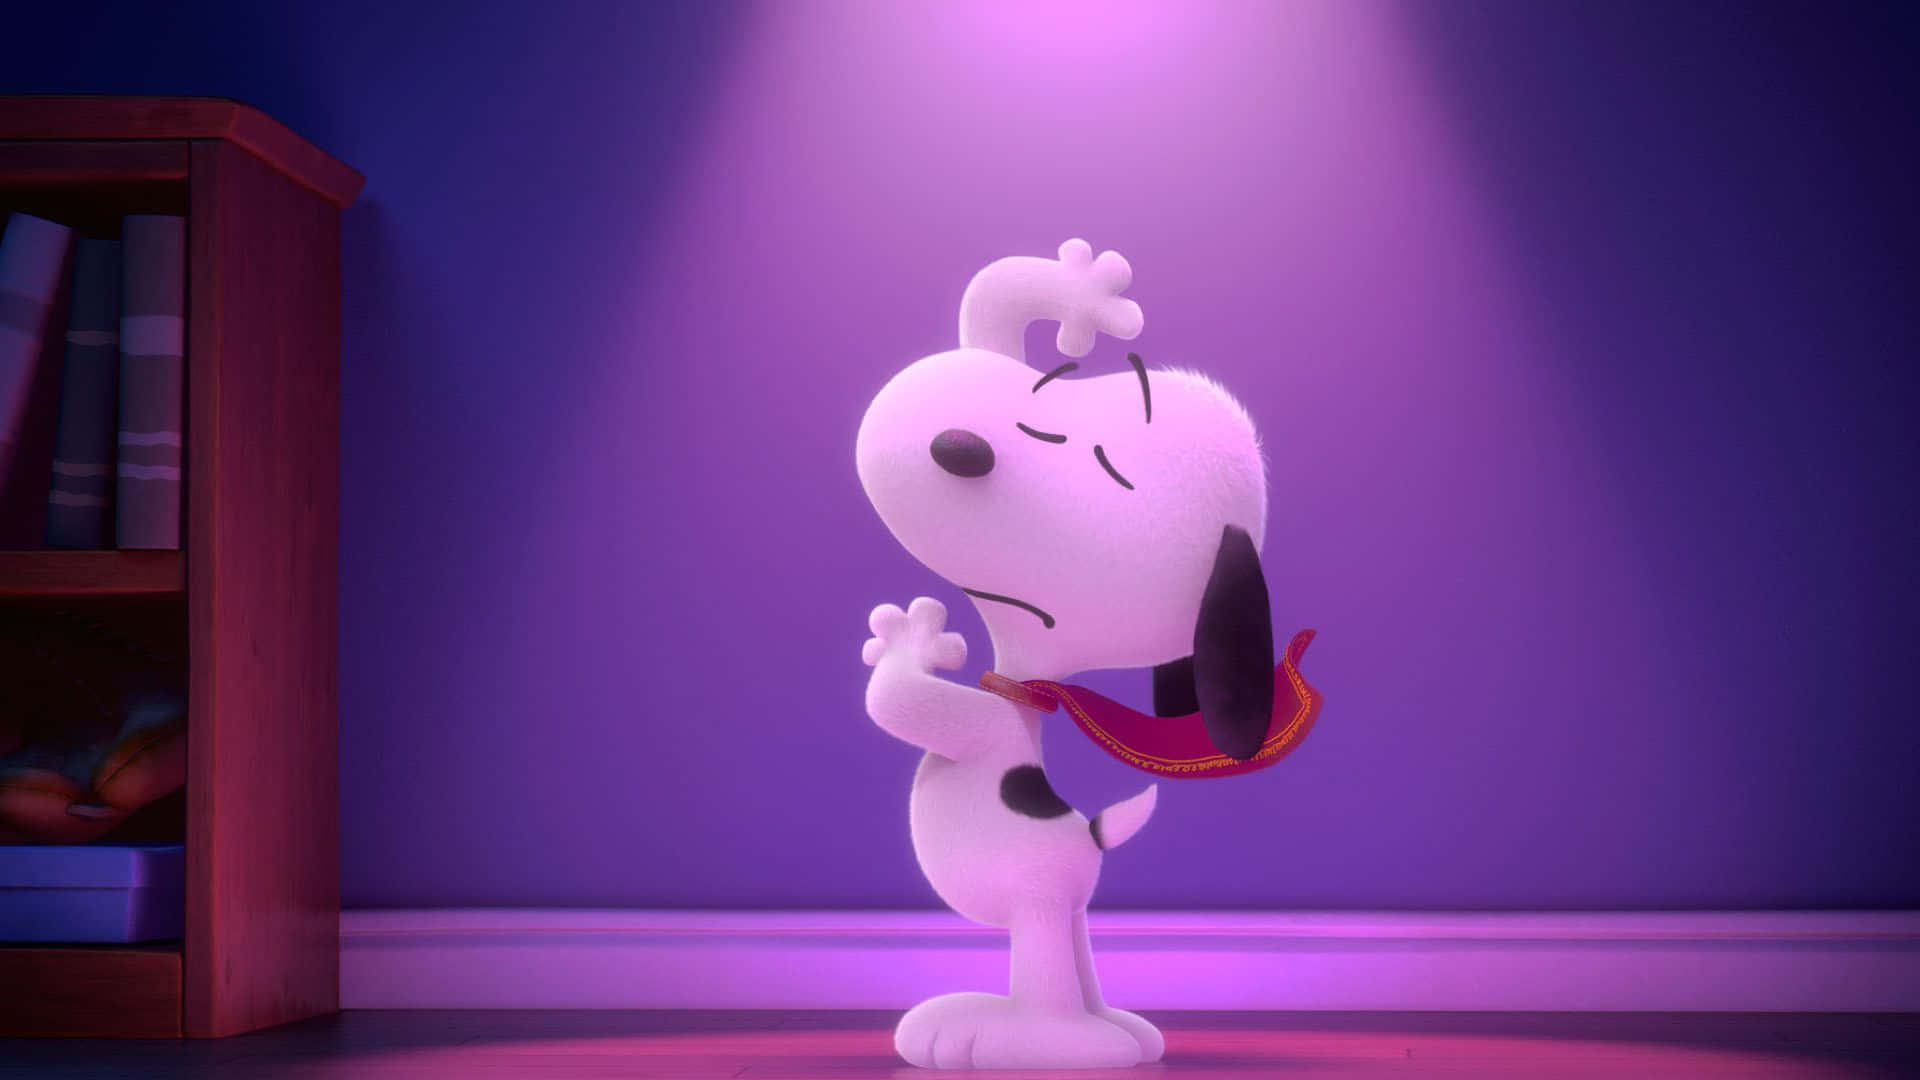 Snoopy the Adventurer